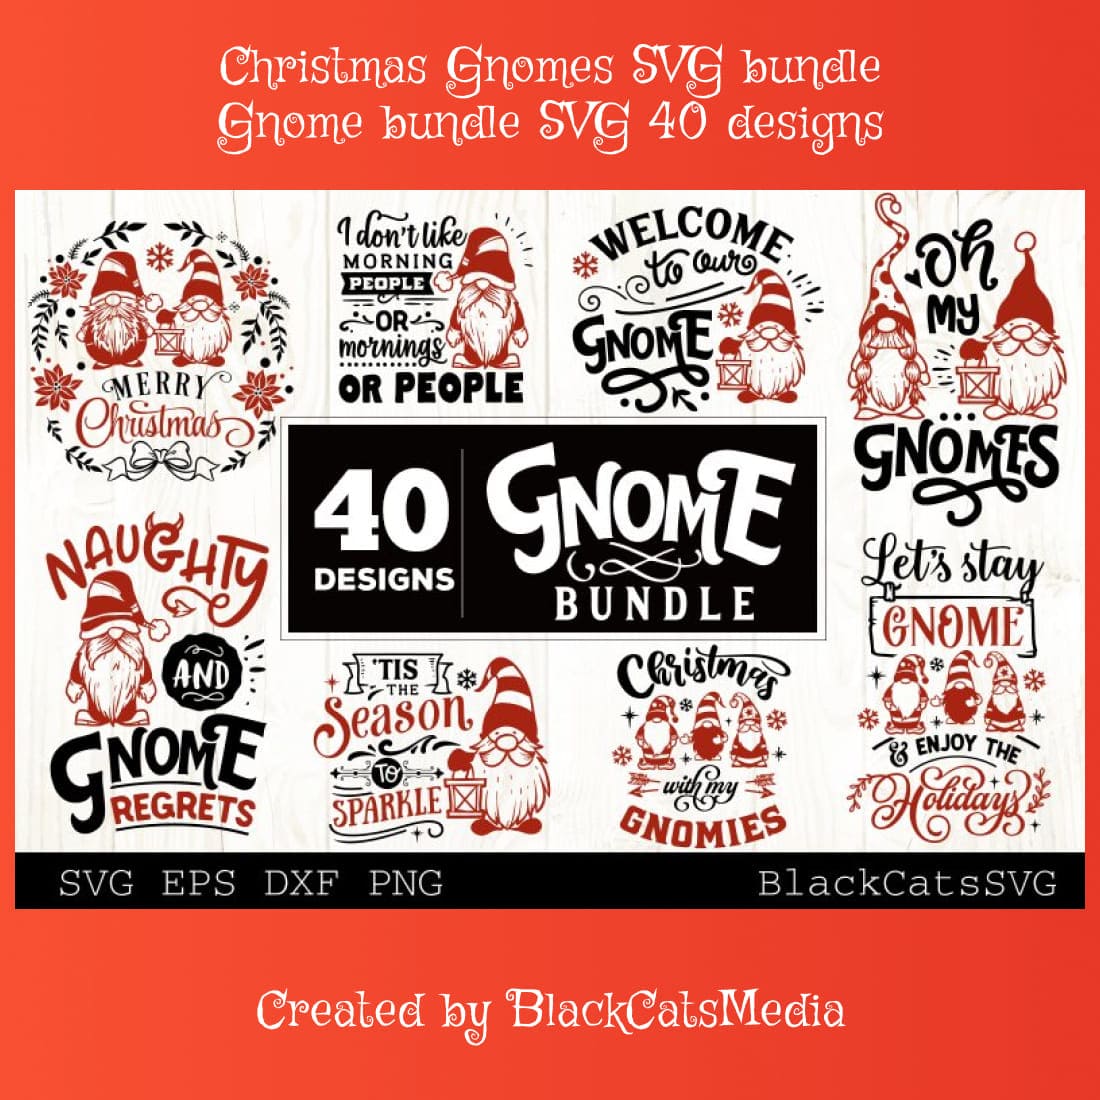 Christmas Gnomes SVG bundle Gnome bundle SVG 40 designs main cover.